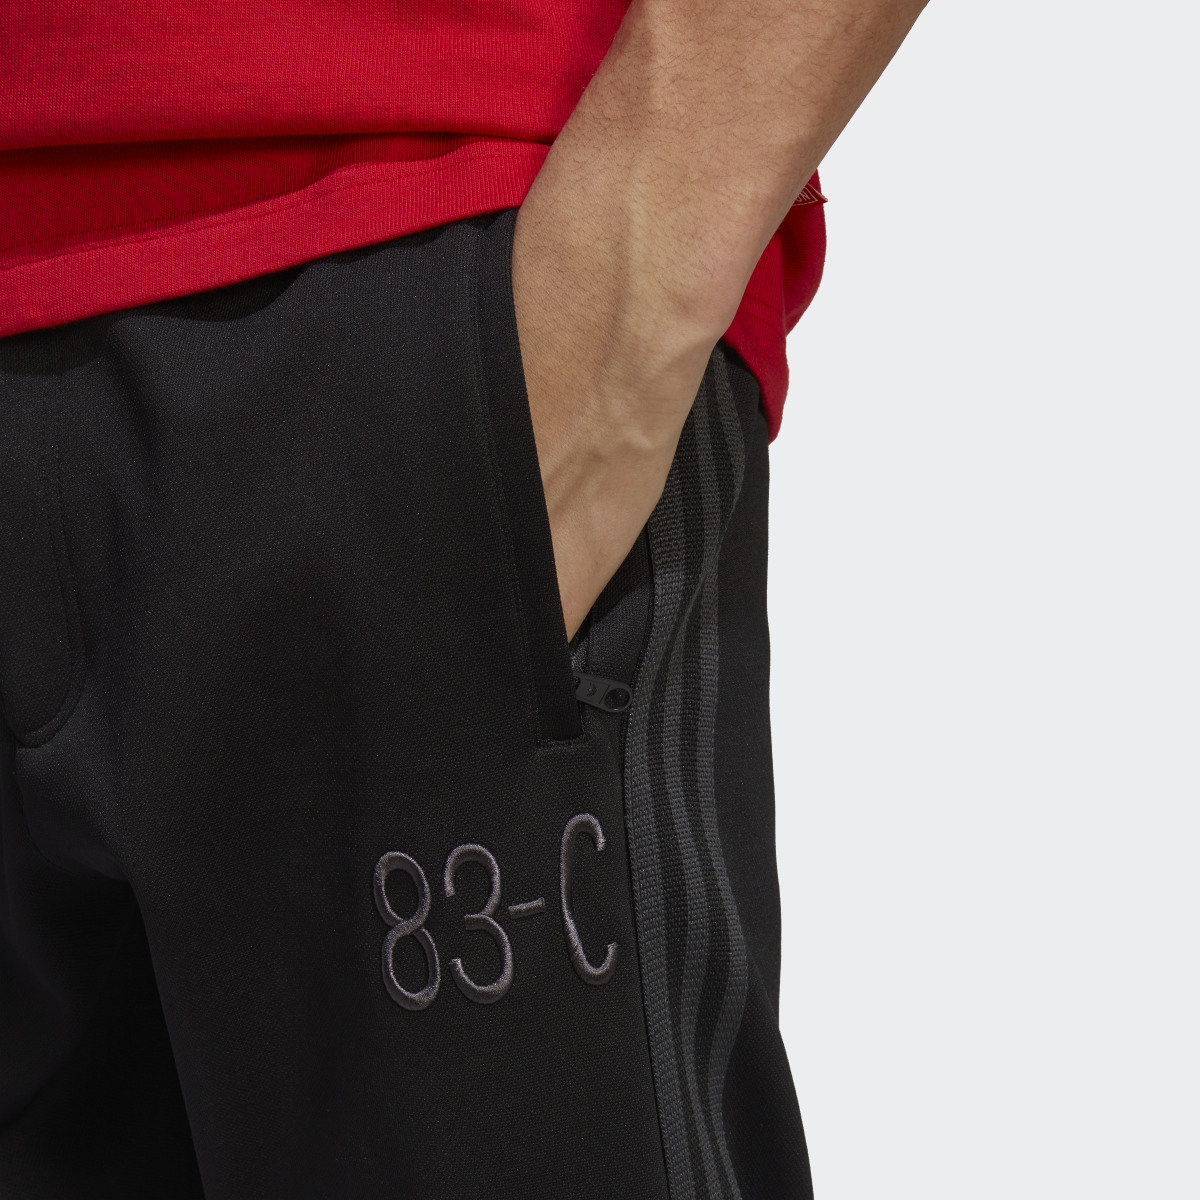 Adidas Track pants 83-C. 5